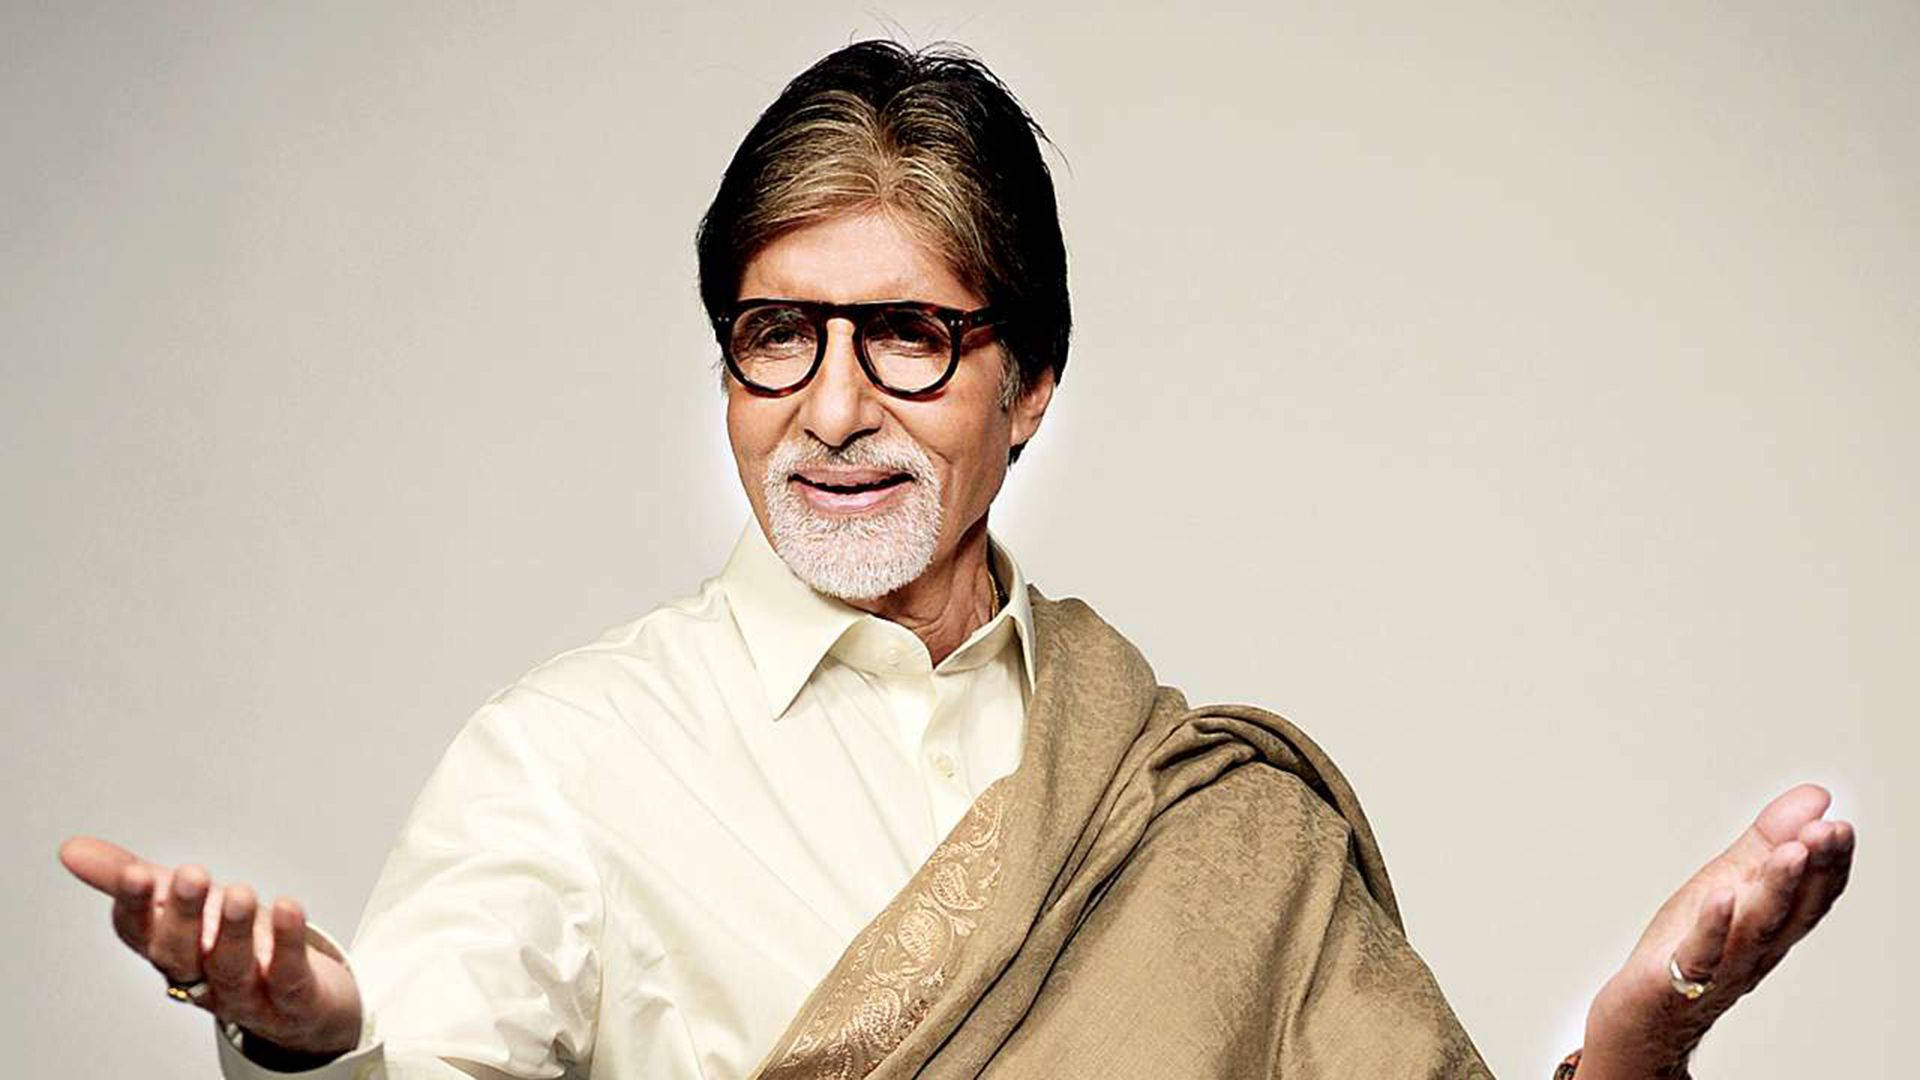 Download Aesthetic Amitabh Bachchan Wallpaper | Wallpapers.com